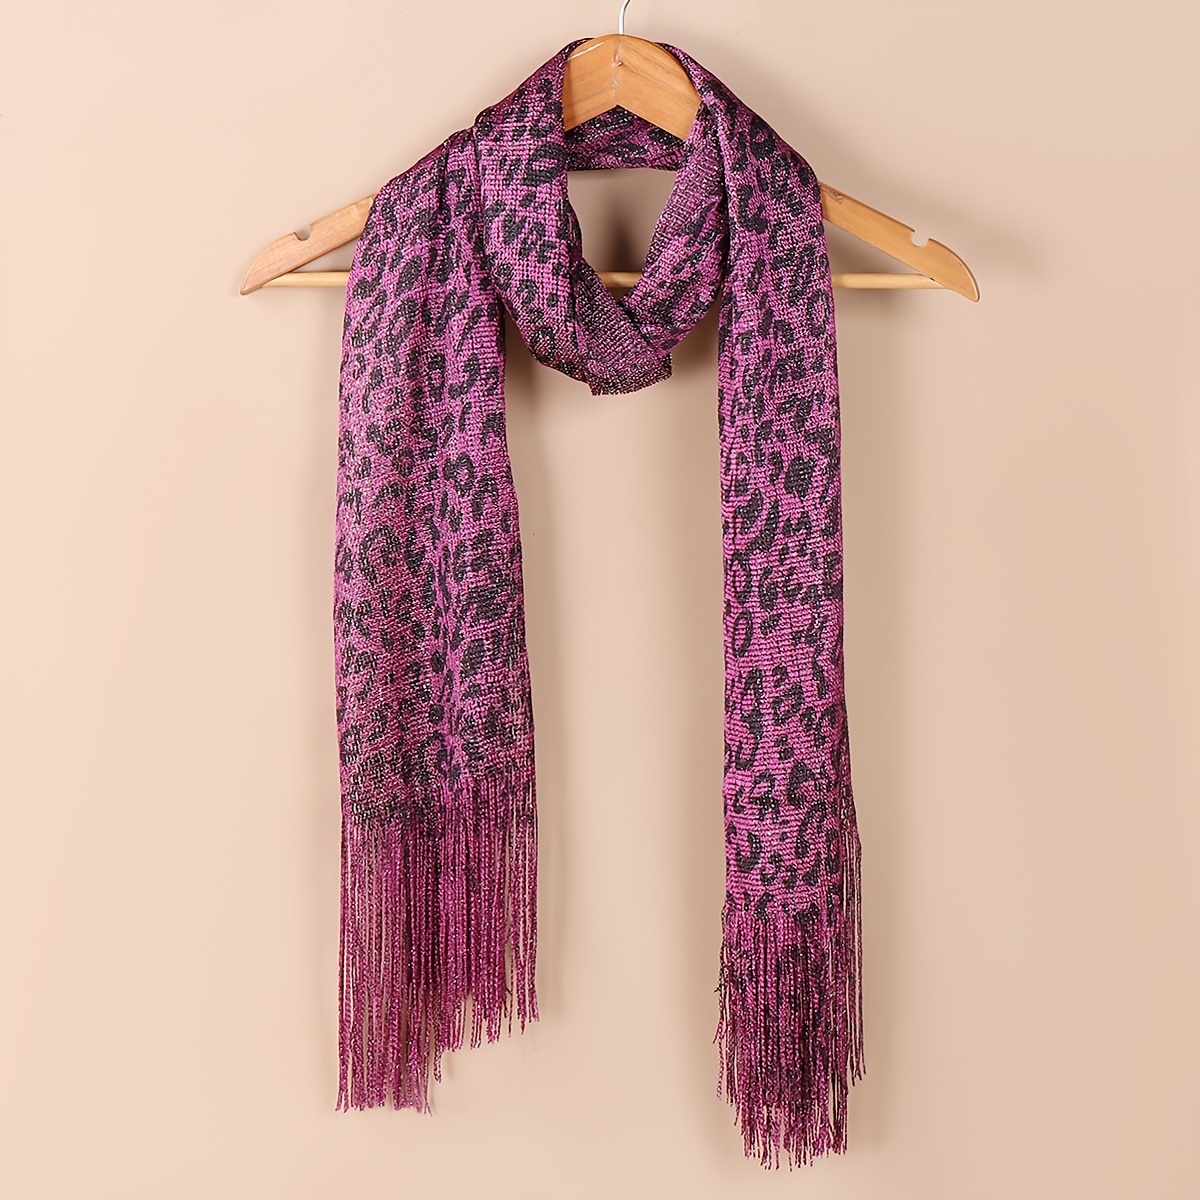 Louis Vuitton LOUIS VUITTON stole shawl scarf leopard cashmere/silk  red/black unisex